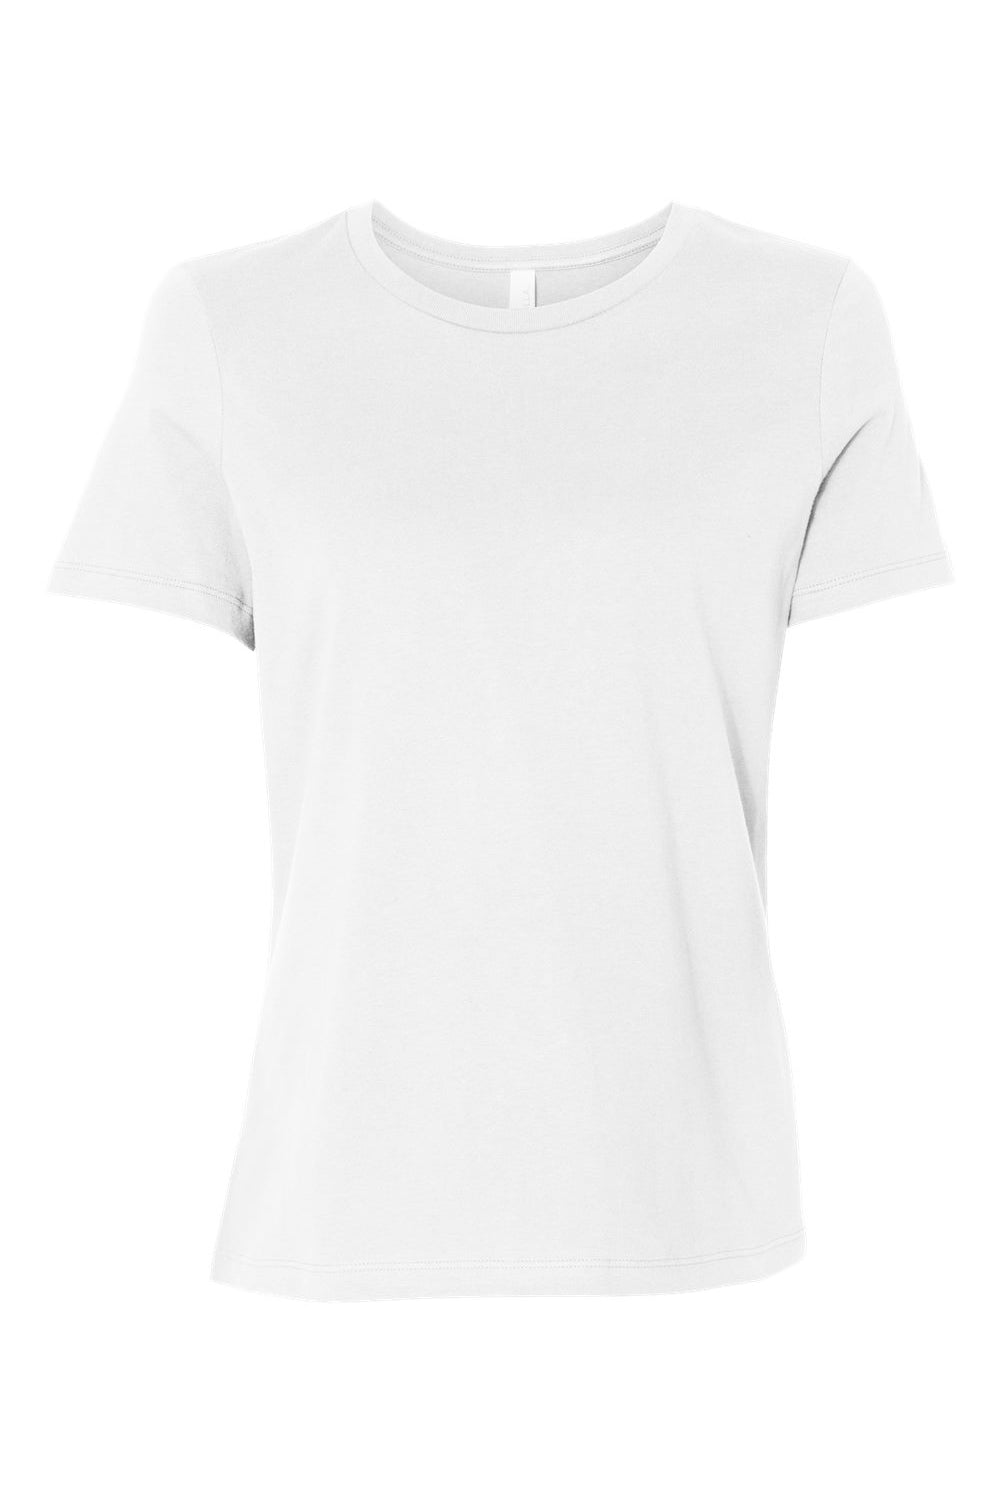 Bella + Canvas BC6400CVC/6400CVC Womens CVC Short Sleeve Crewneck T-Shirt Solid White Flat Front